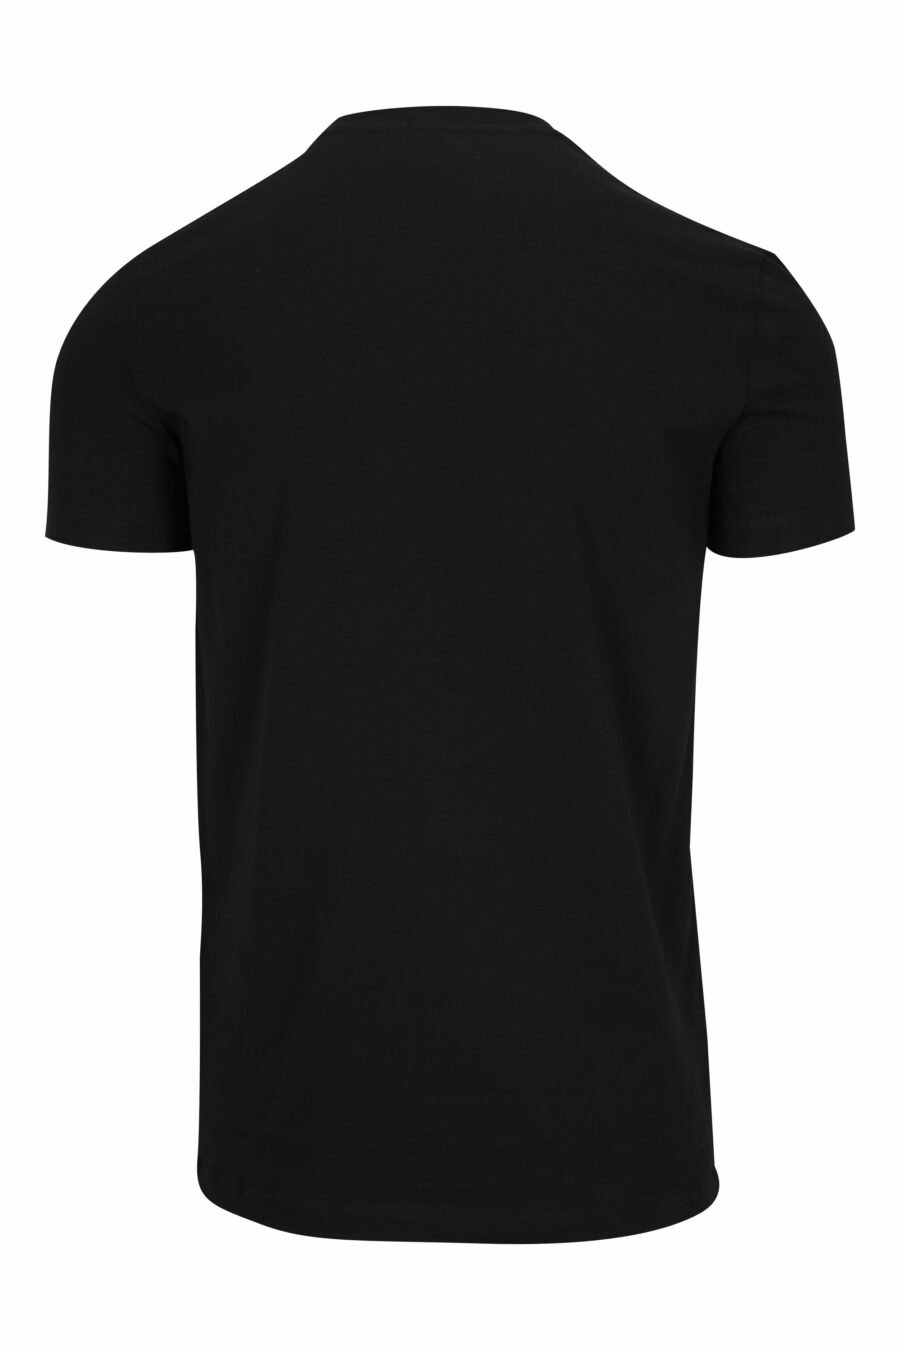 Camiseta negra con minilogo "underwear" blanco - 8032674811509 1